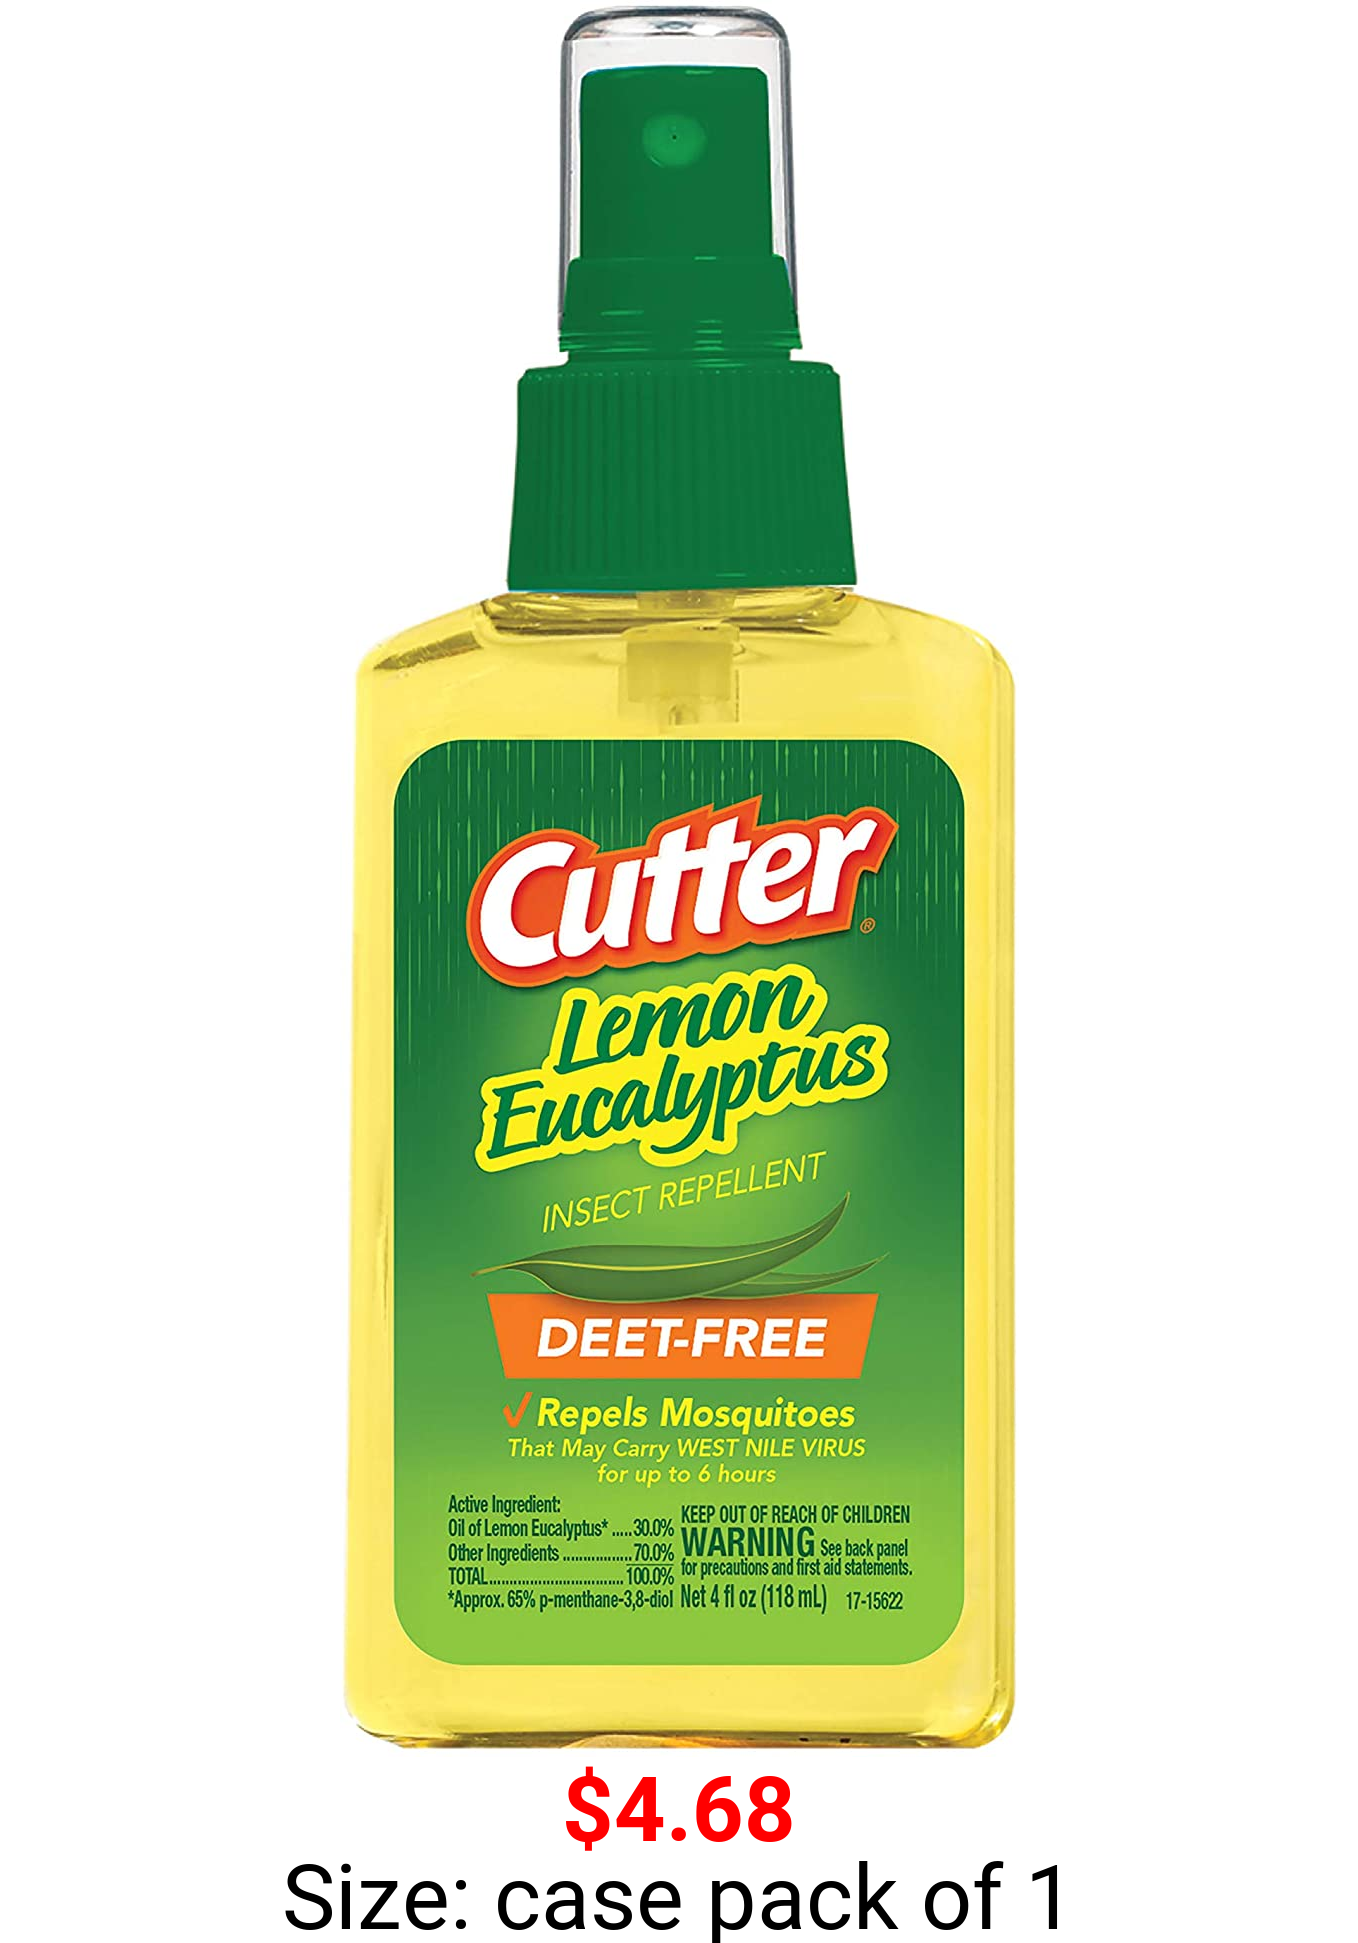 Cutter Lemon Eucalyptus Insect Repellent (Pump Spray) (HG-96014), case pack of 1